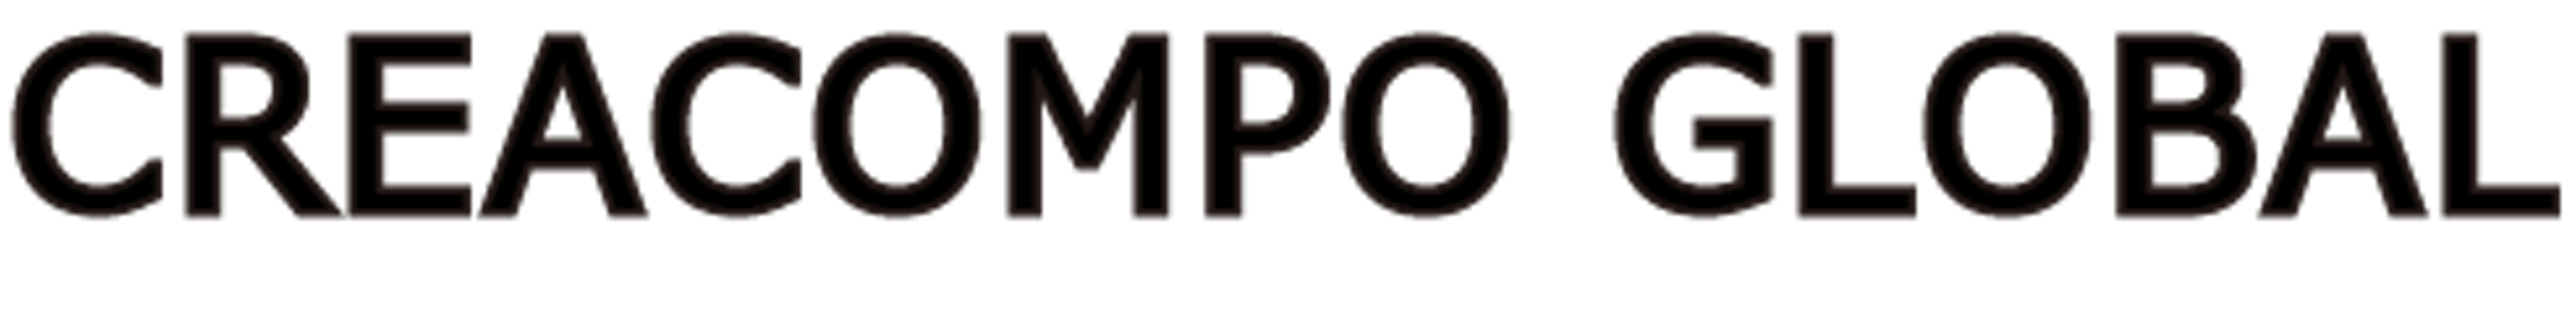 CREACOMPO GLOBAL Logo